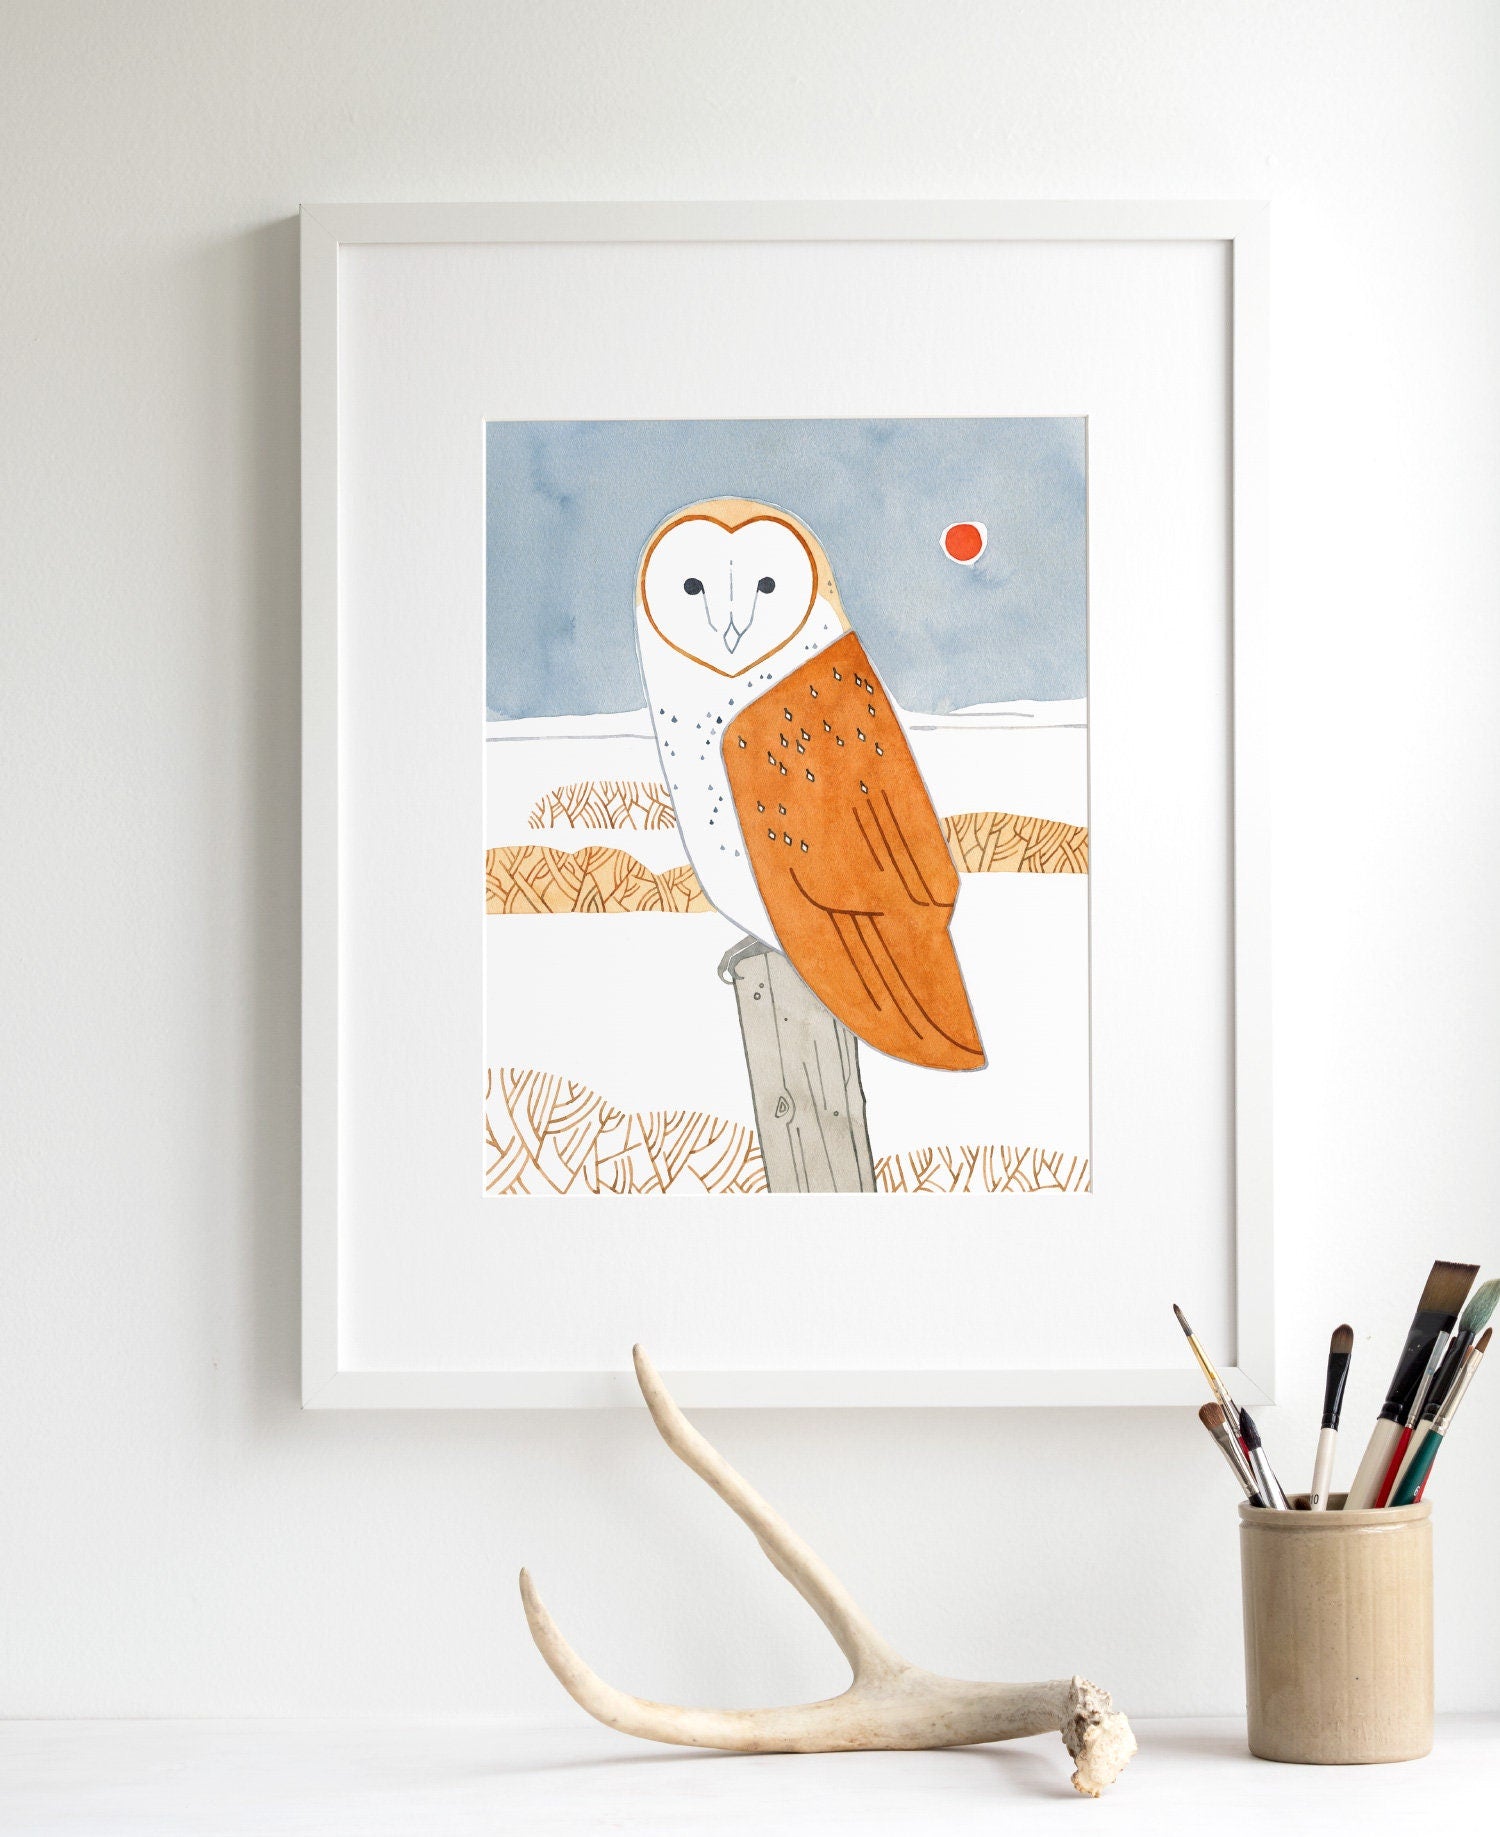 Barn Owl Folk Art Print, Winter Landscape Watercolor Bird Painting